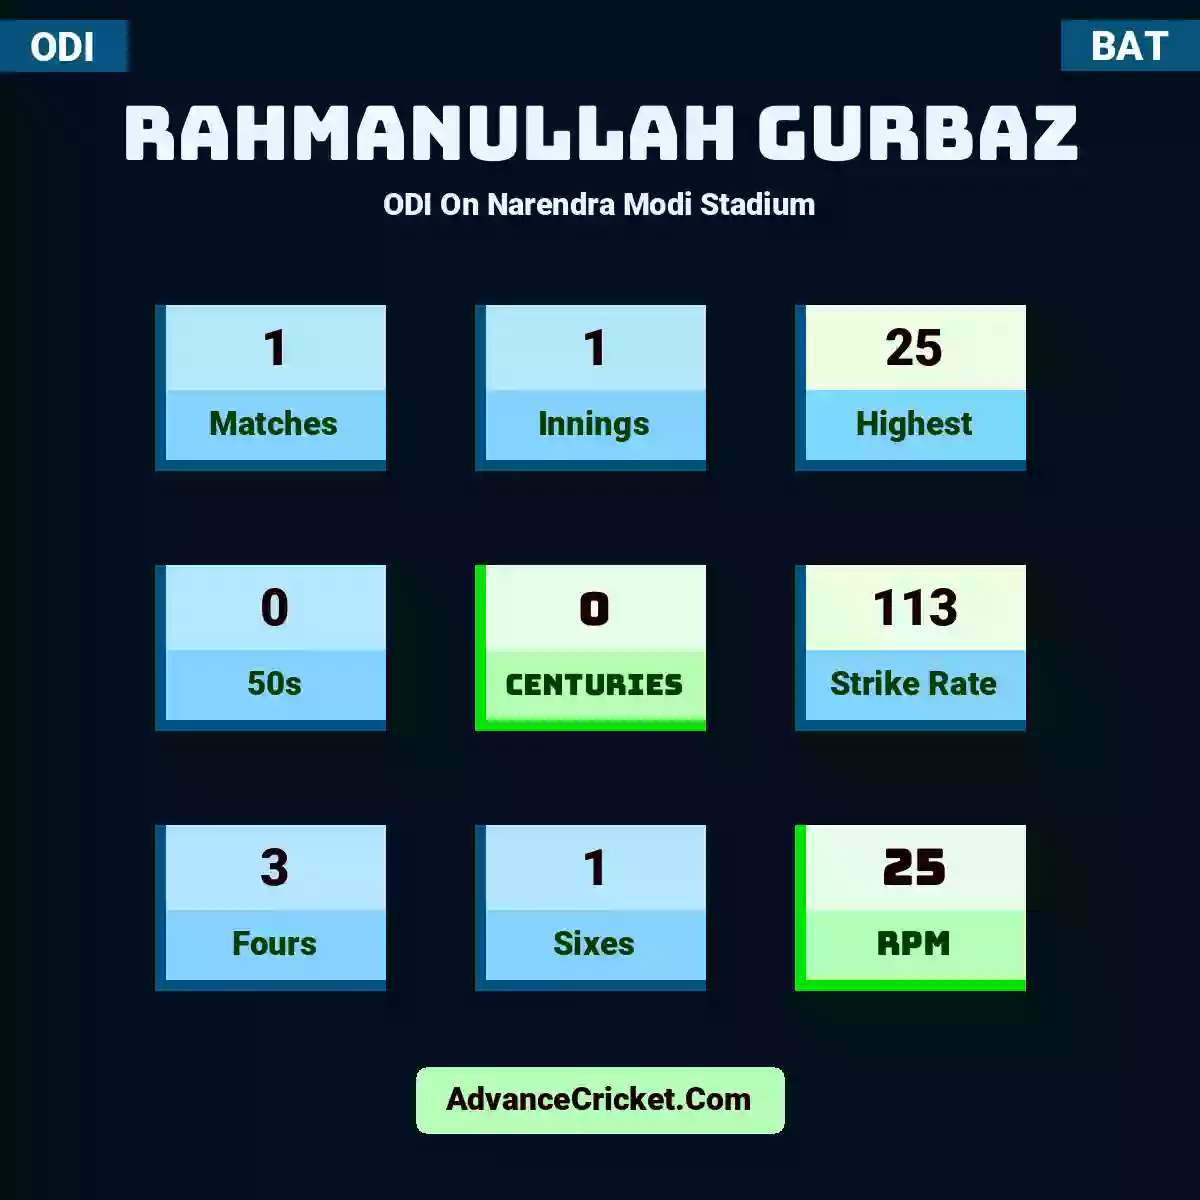 Rahmanullah Gurbaz ODI  On Narendra Modi Stadium, Rahmanullah Gurbaz played 1 matches, scored 25 runs as highest, 0 half-centuries, and 0 centuries, with a strike rate of 113. R.Gurbaz hit 3 fours and 1 sixes, with an RPM of 25.